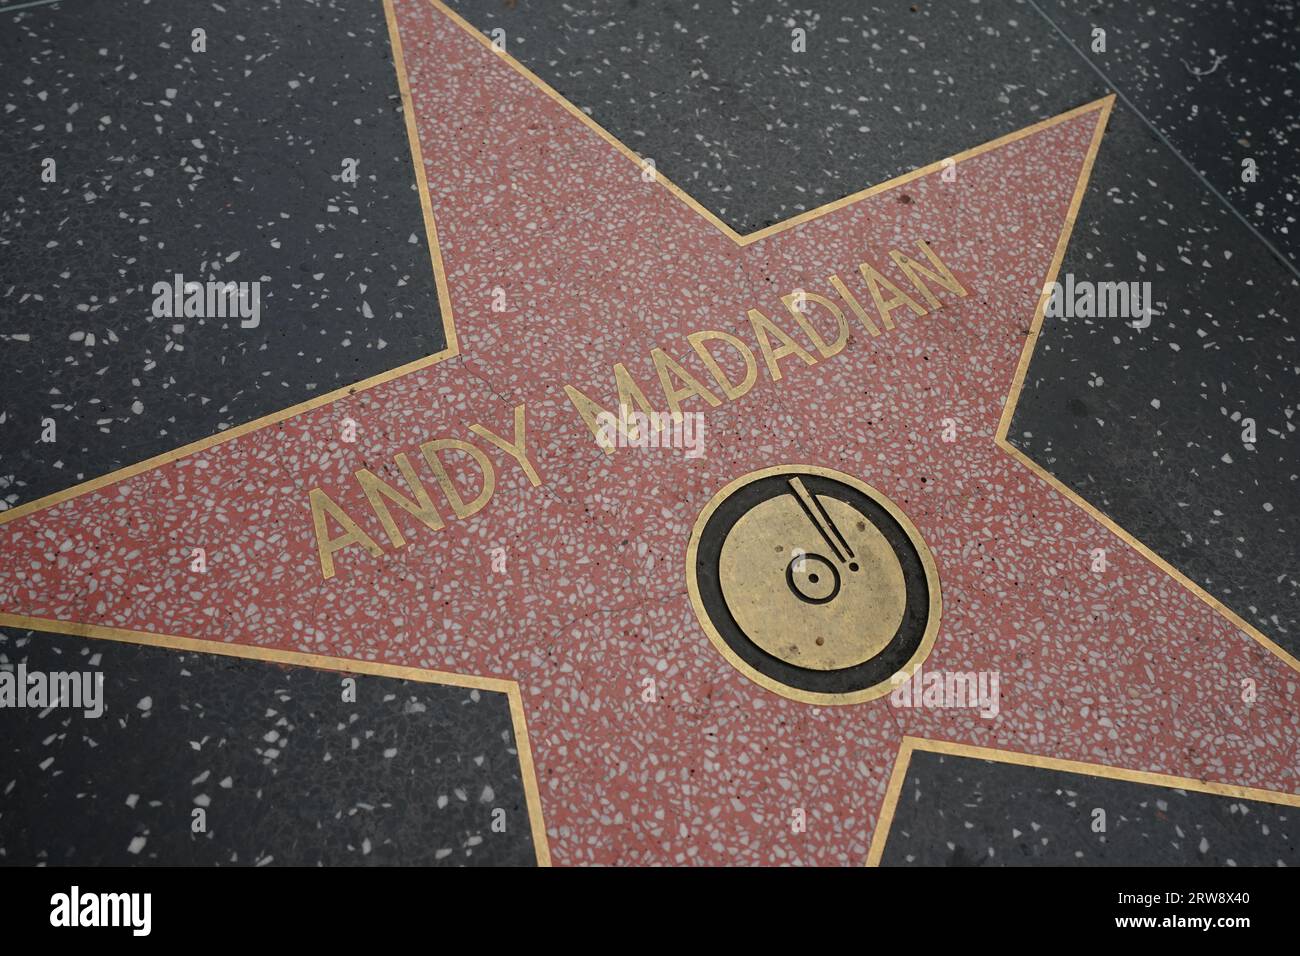 Andy Madadian Hollywood Walk of Fame Star Stockfoto